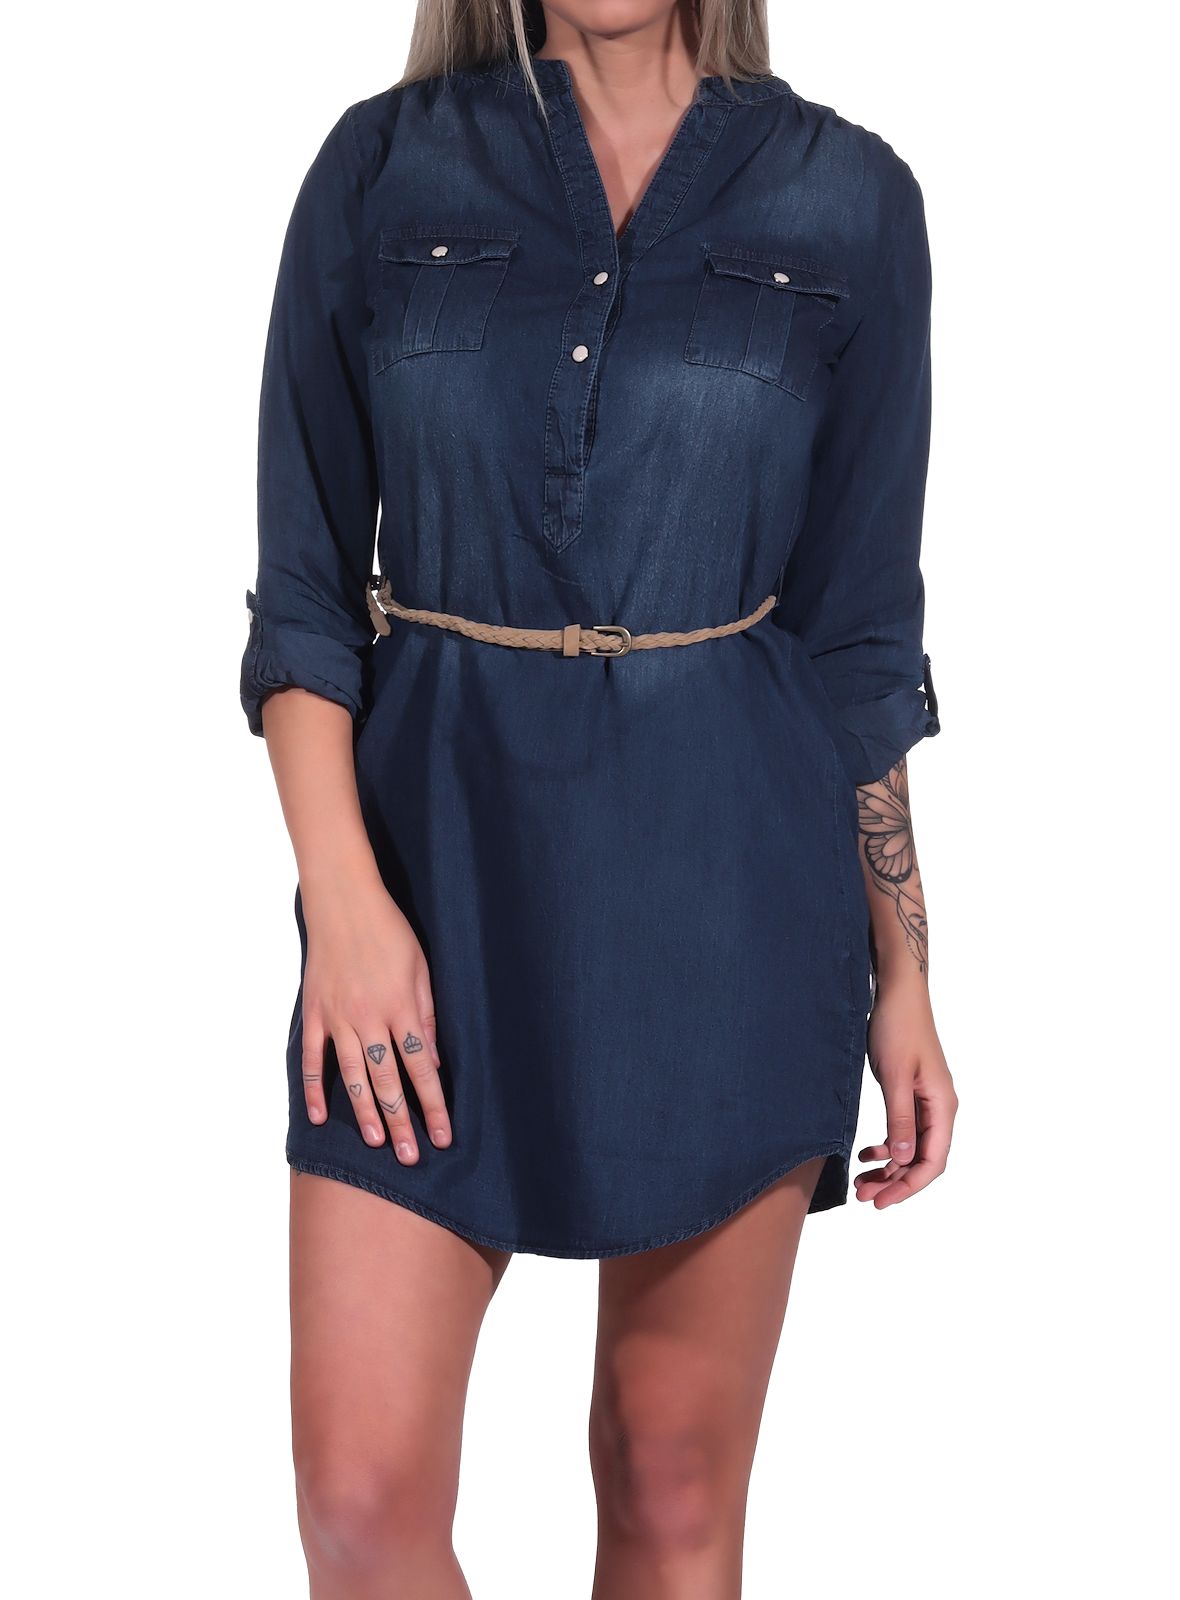 Hailys Damen Kleid Jeanskleid Hemdkleid Shirtkleid Minikleid langarm Denim  Patty | eBay